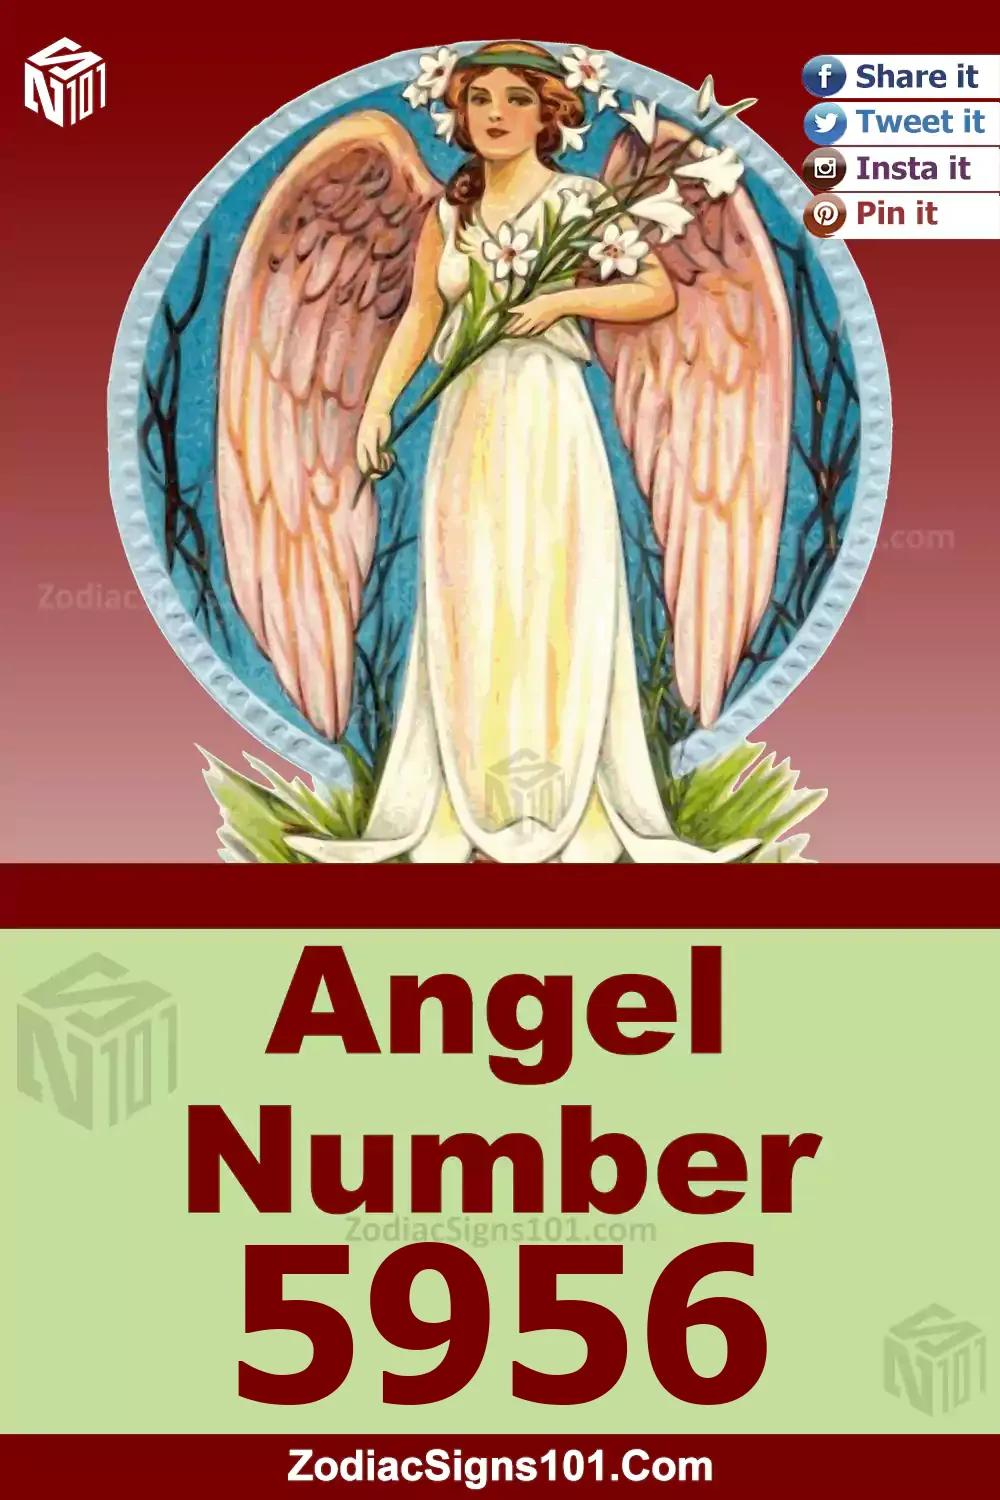 5956-Angel-Number-Meaning.jpg